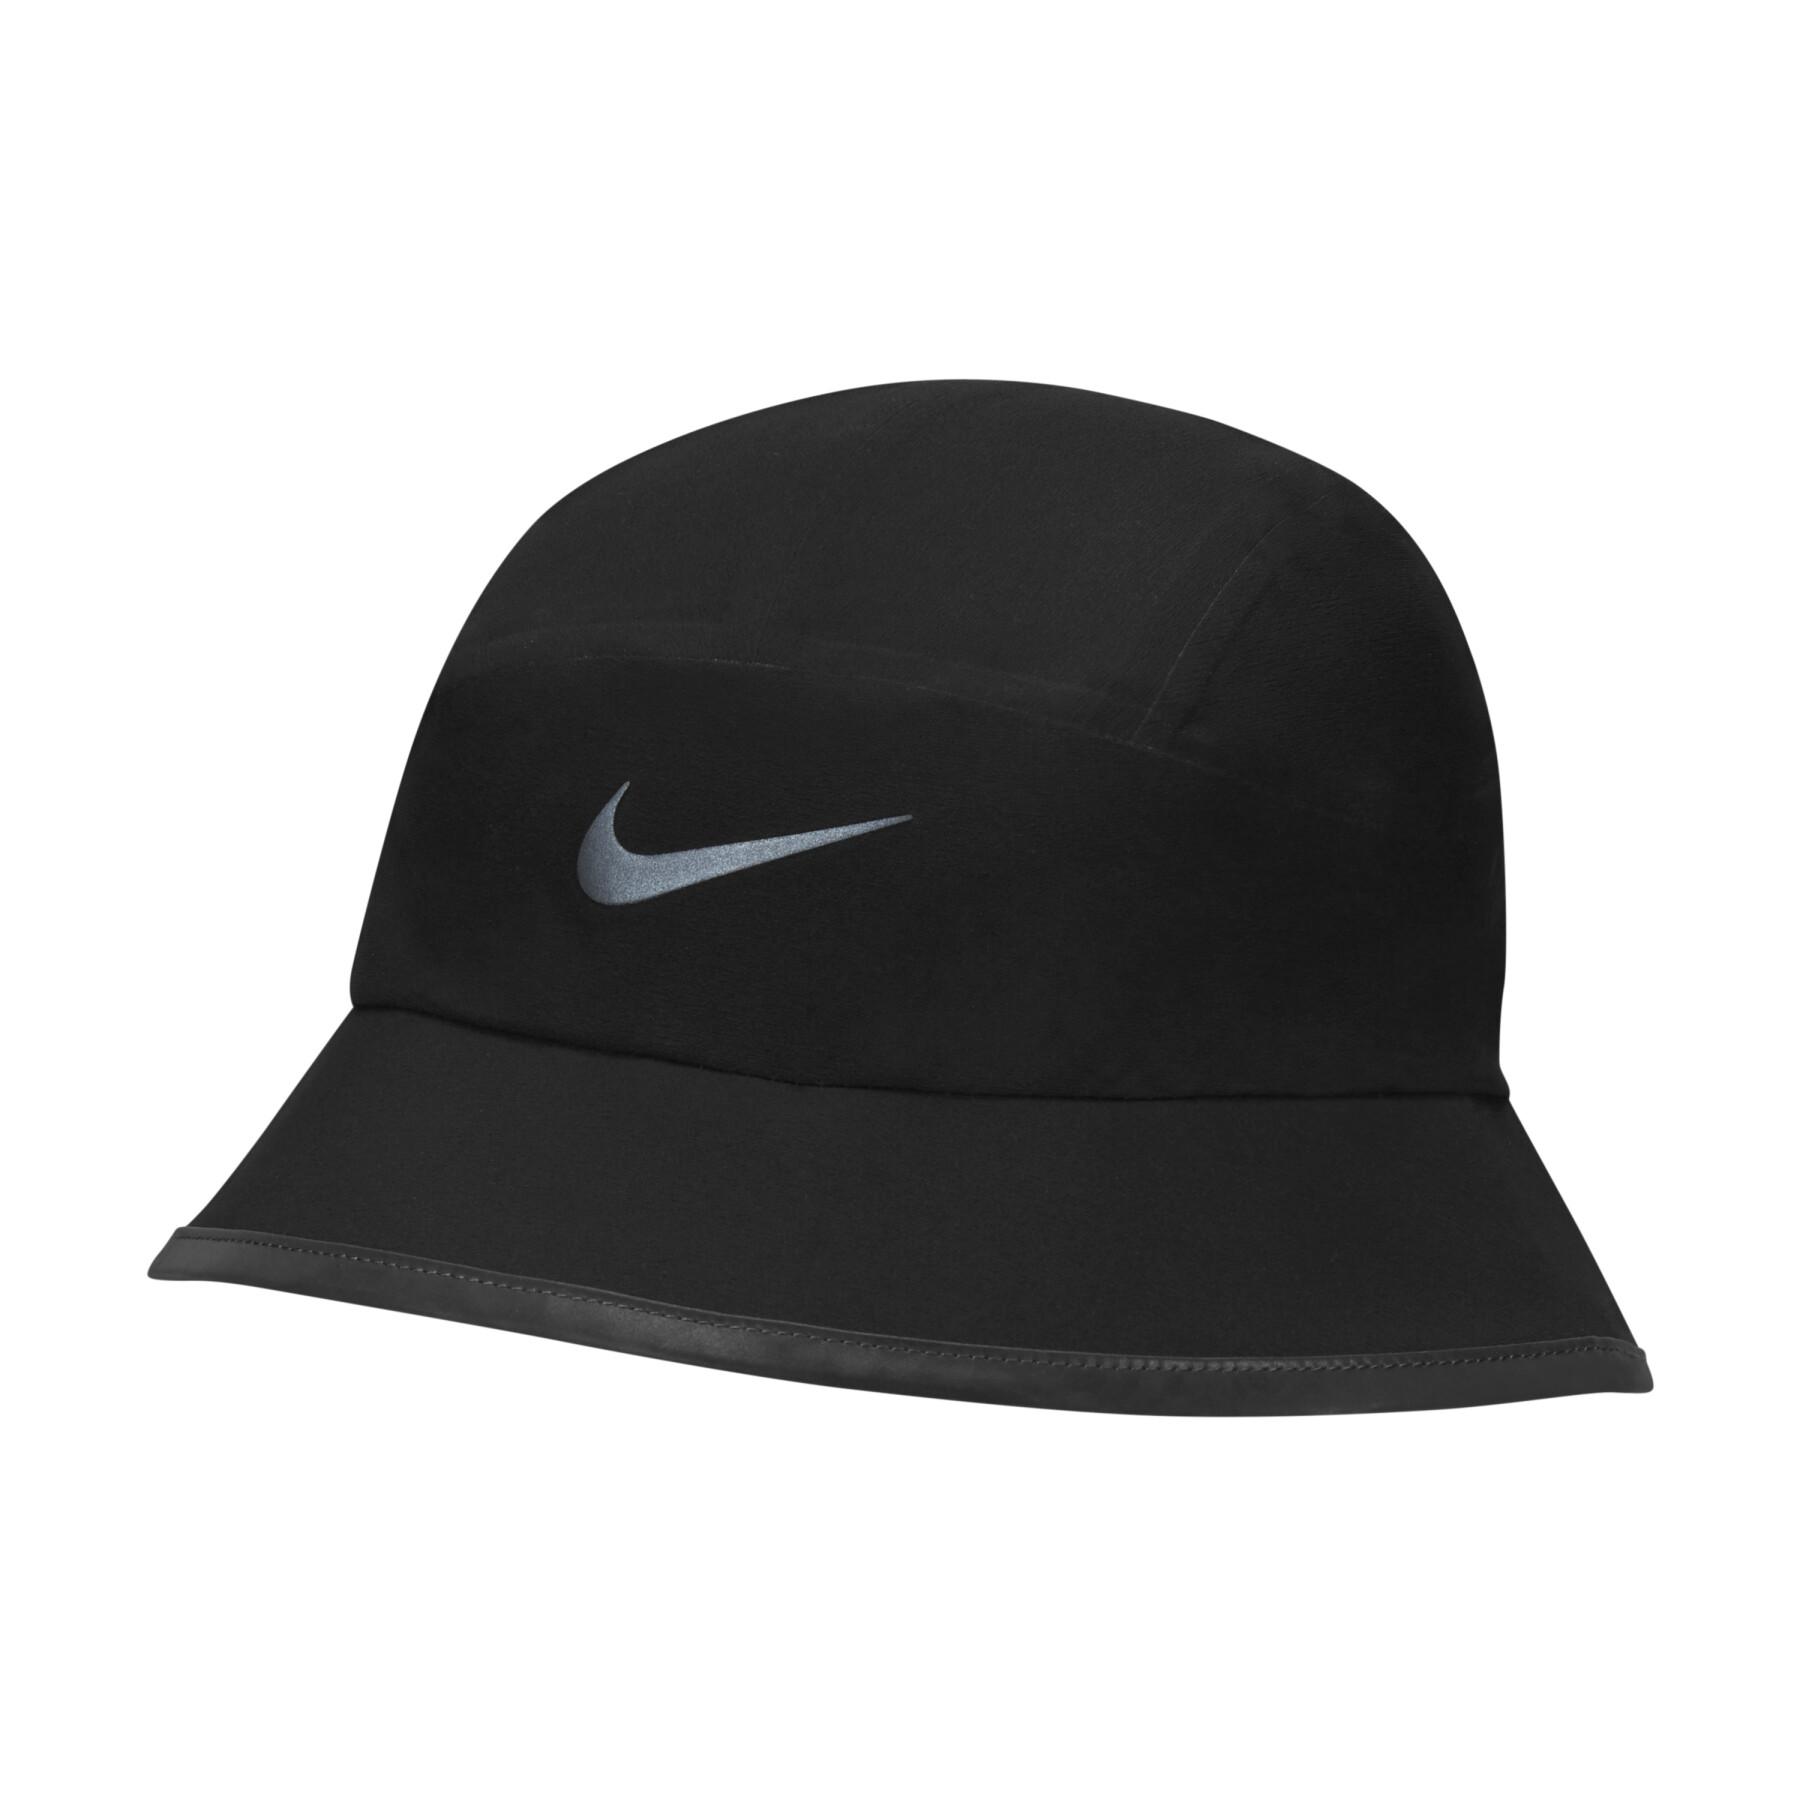 Nike storm bucket hat